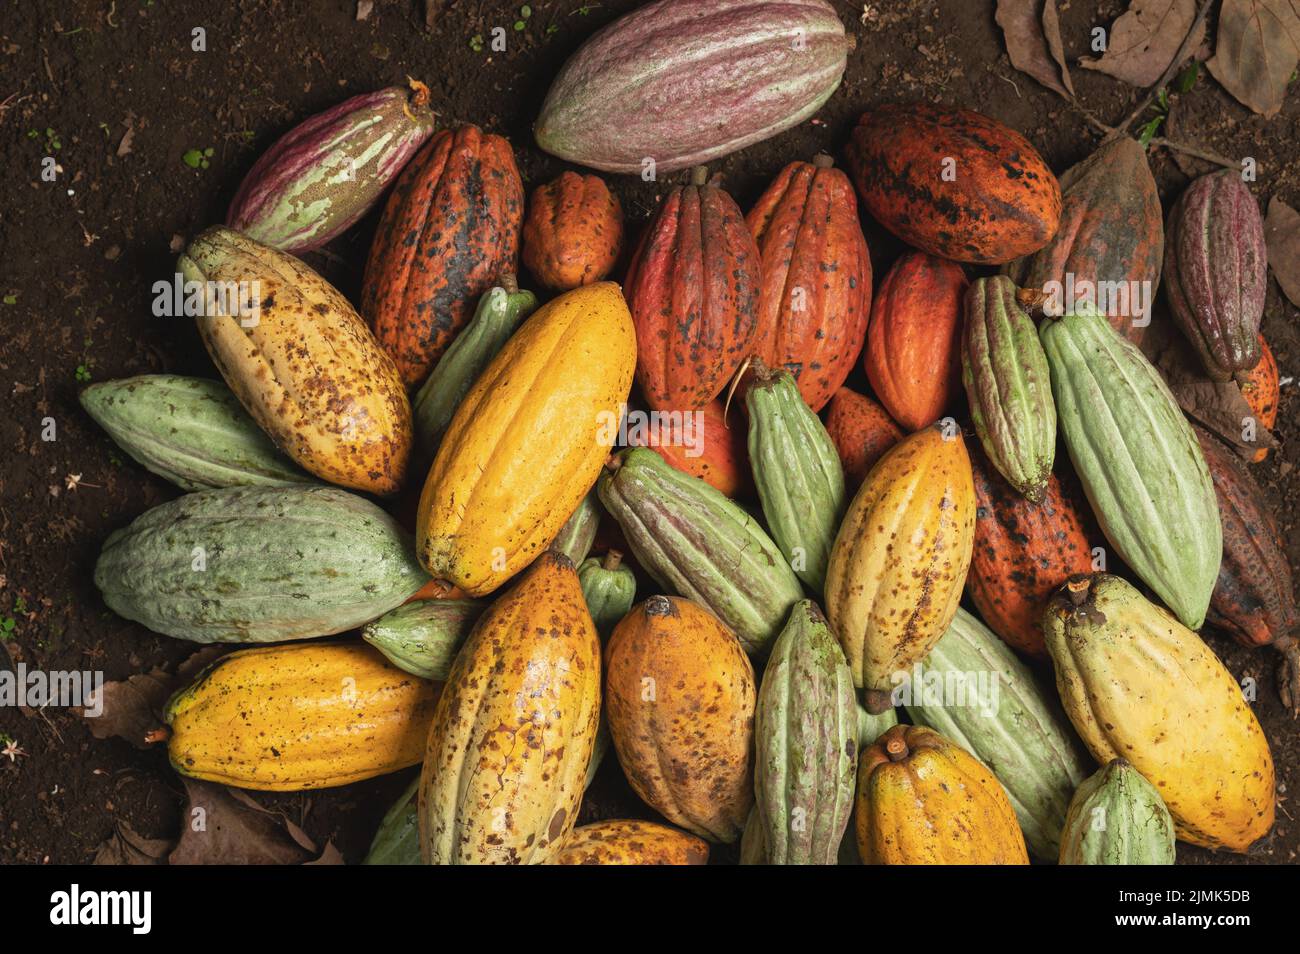 Pila de frutos maduros de cacao sobre fondo del suelo Foto de stock